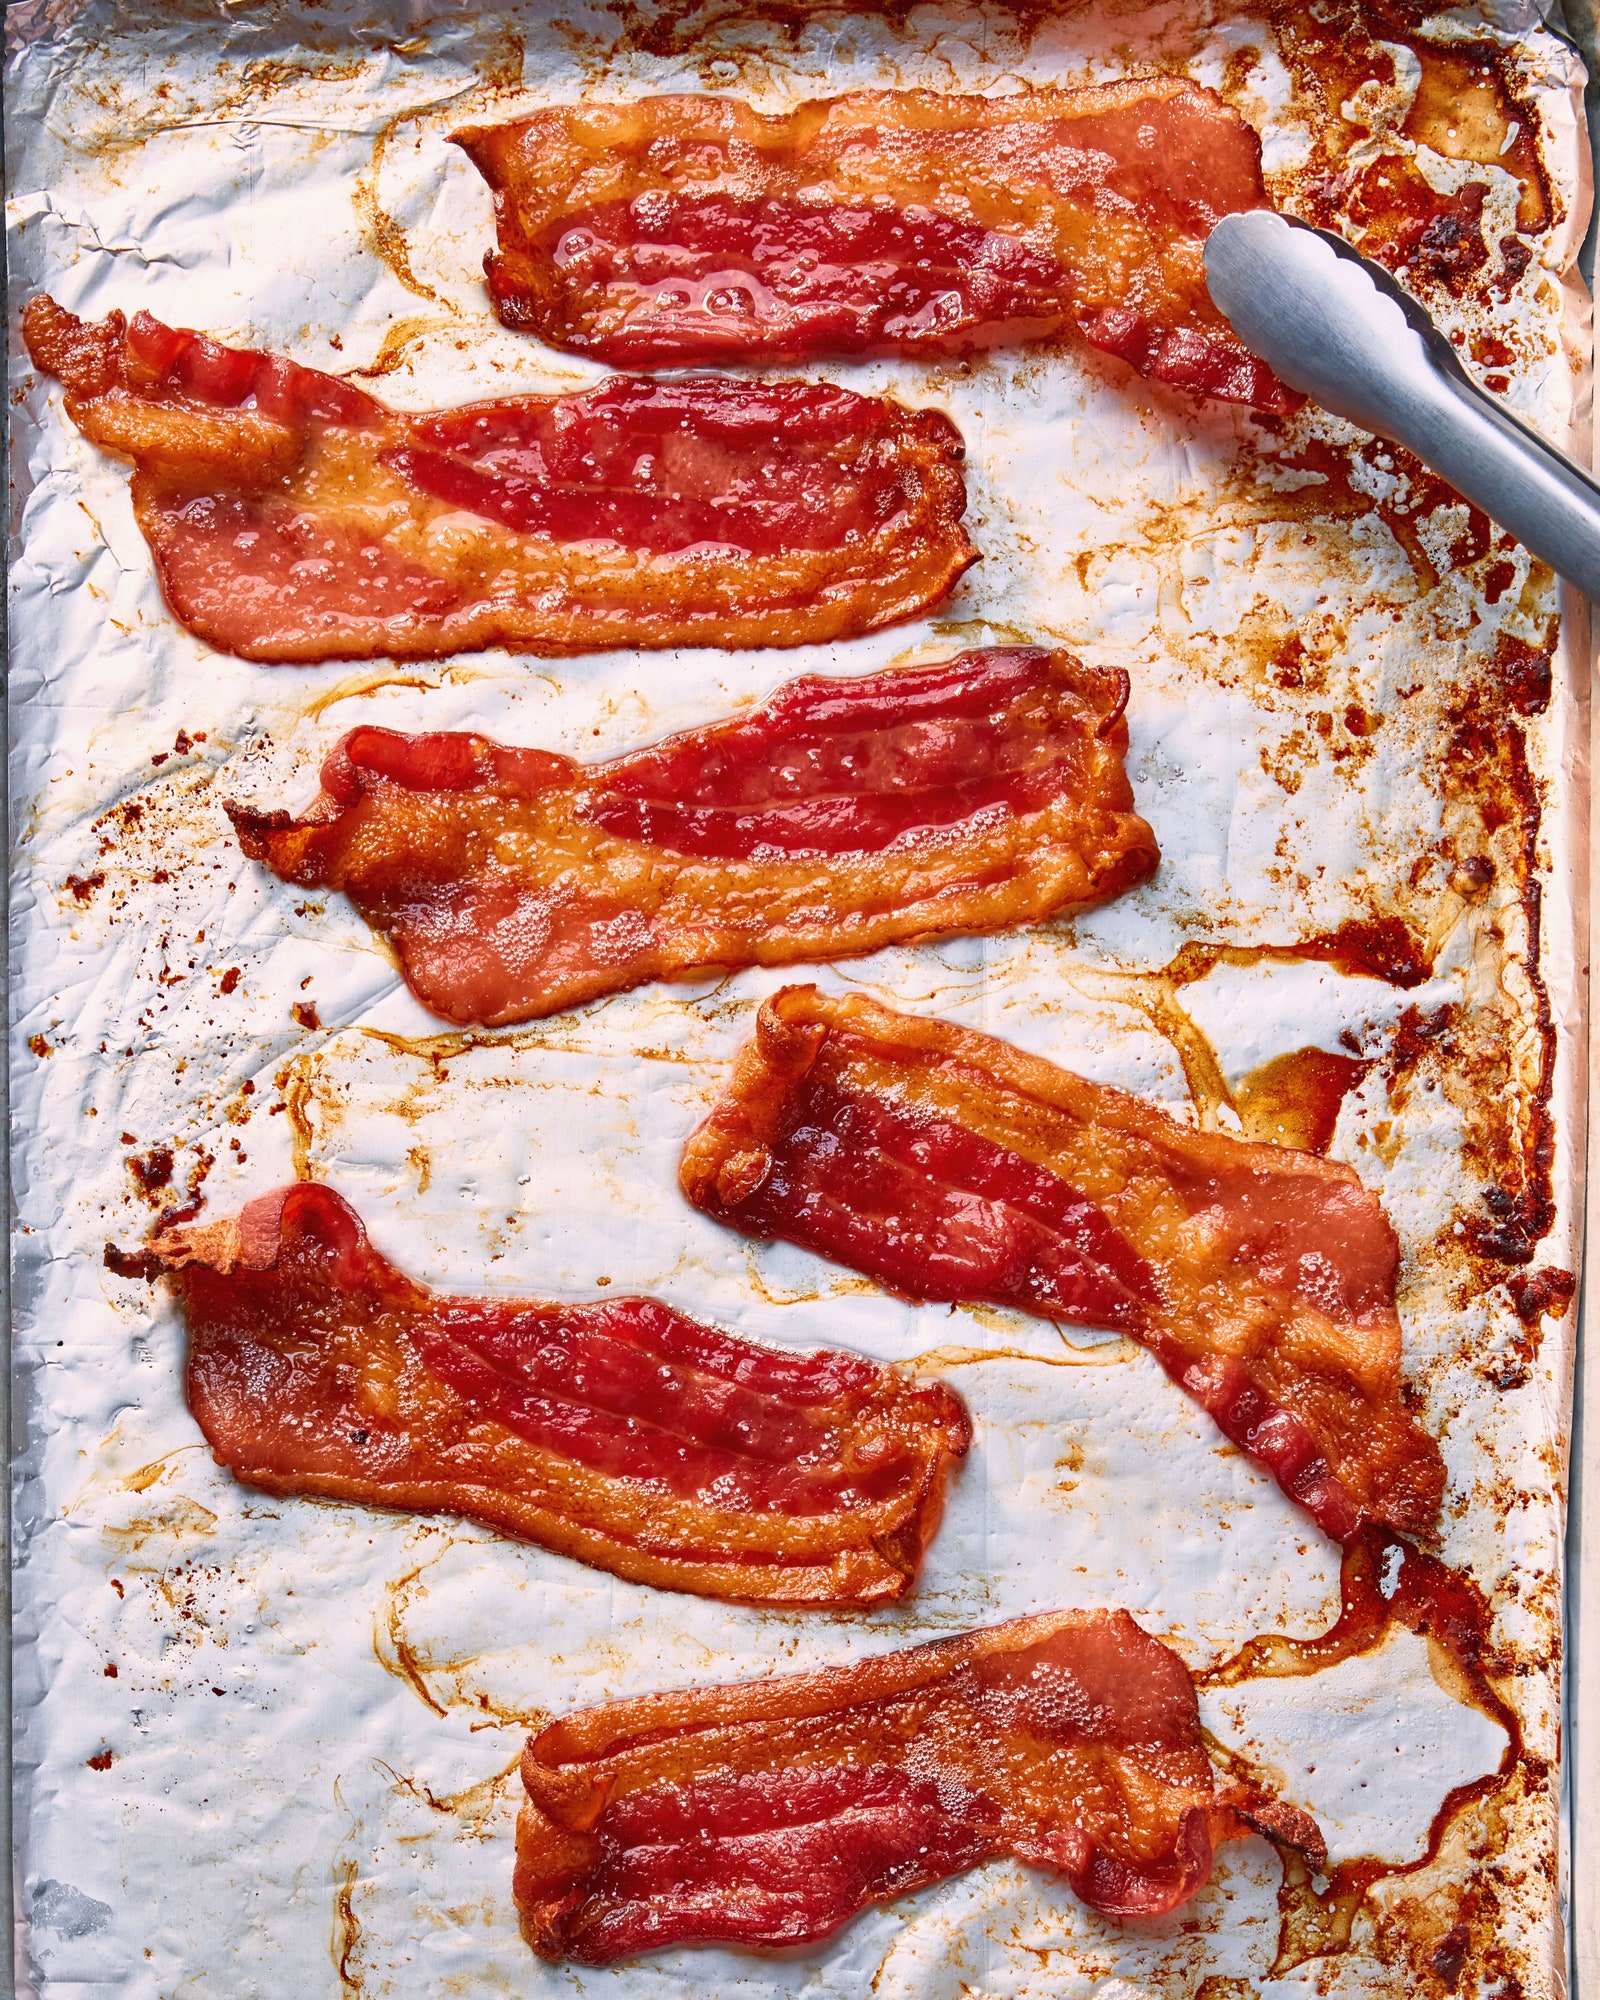 Strips of crispy bacon on a sheet of aluminum foil.